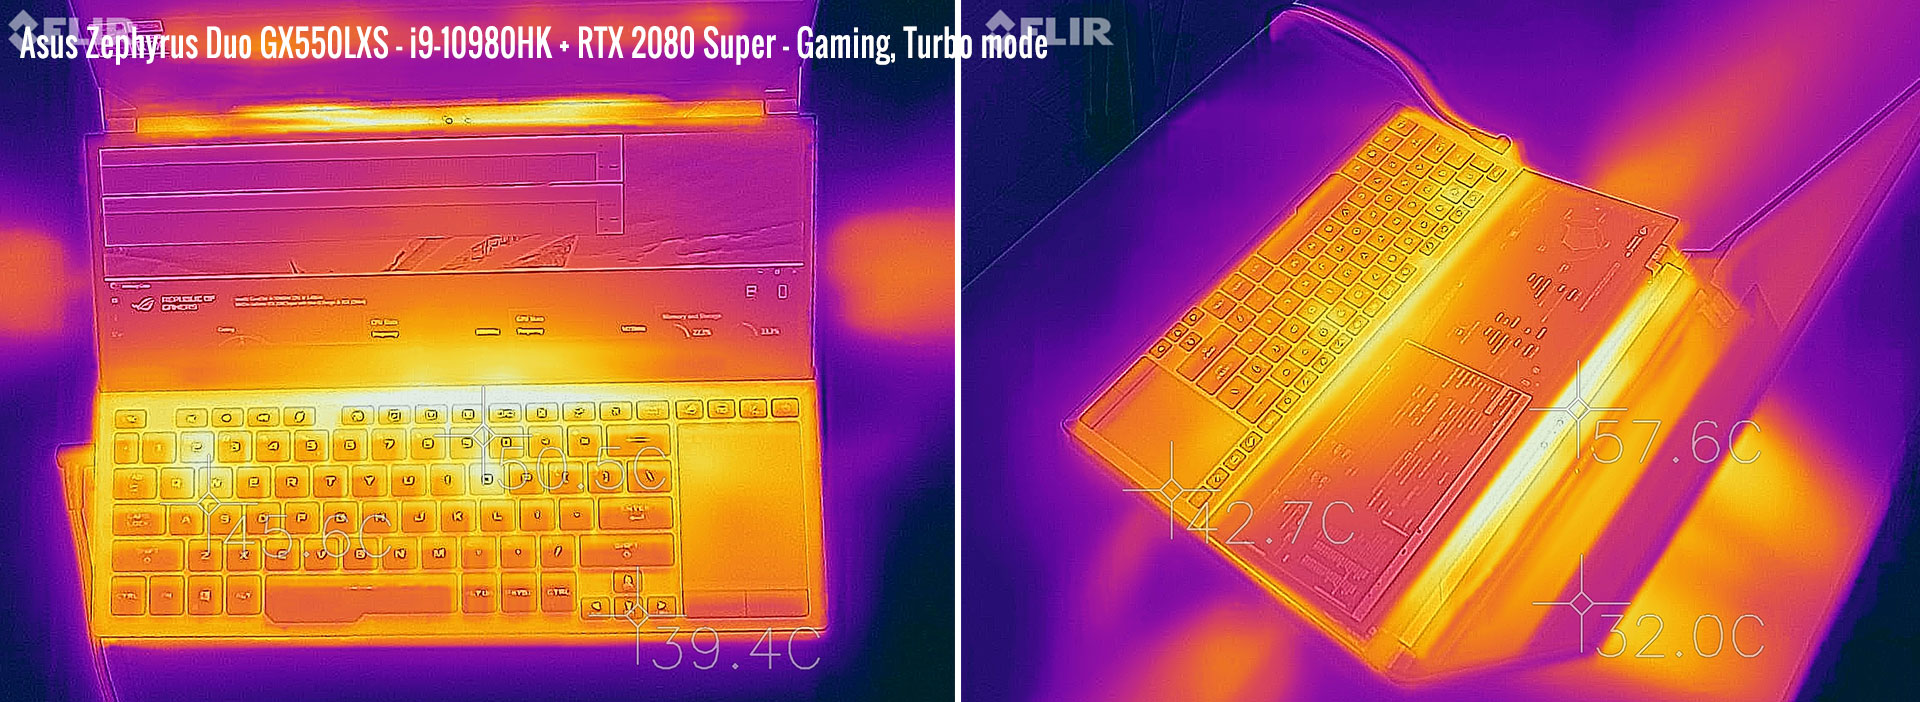 temperatures asus gx550lxs gaming turbo